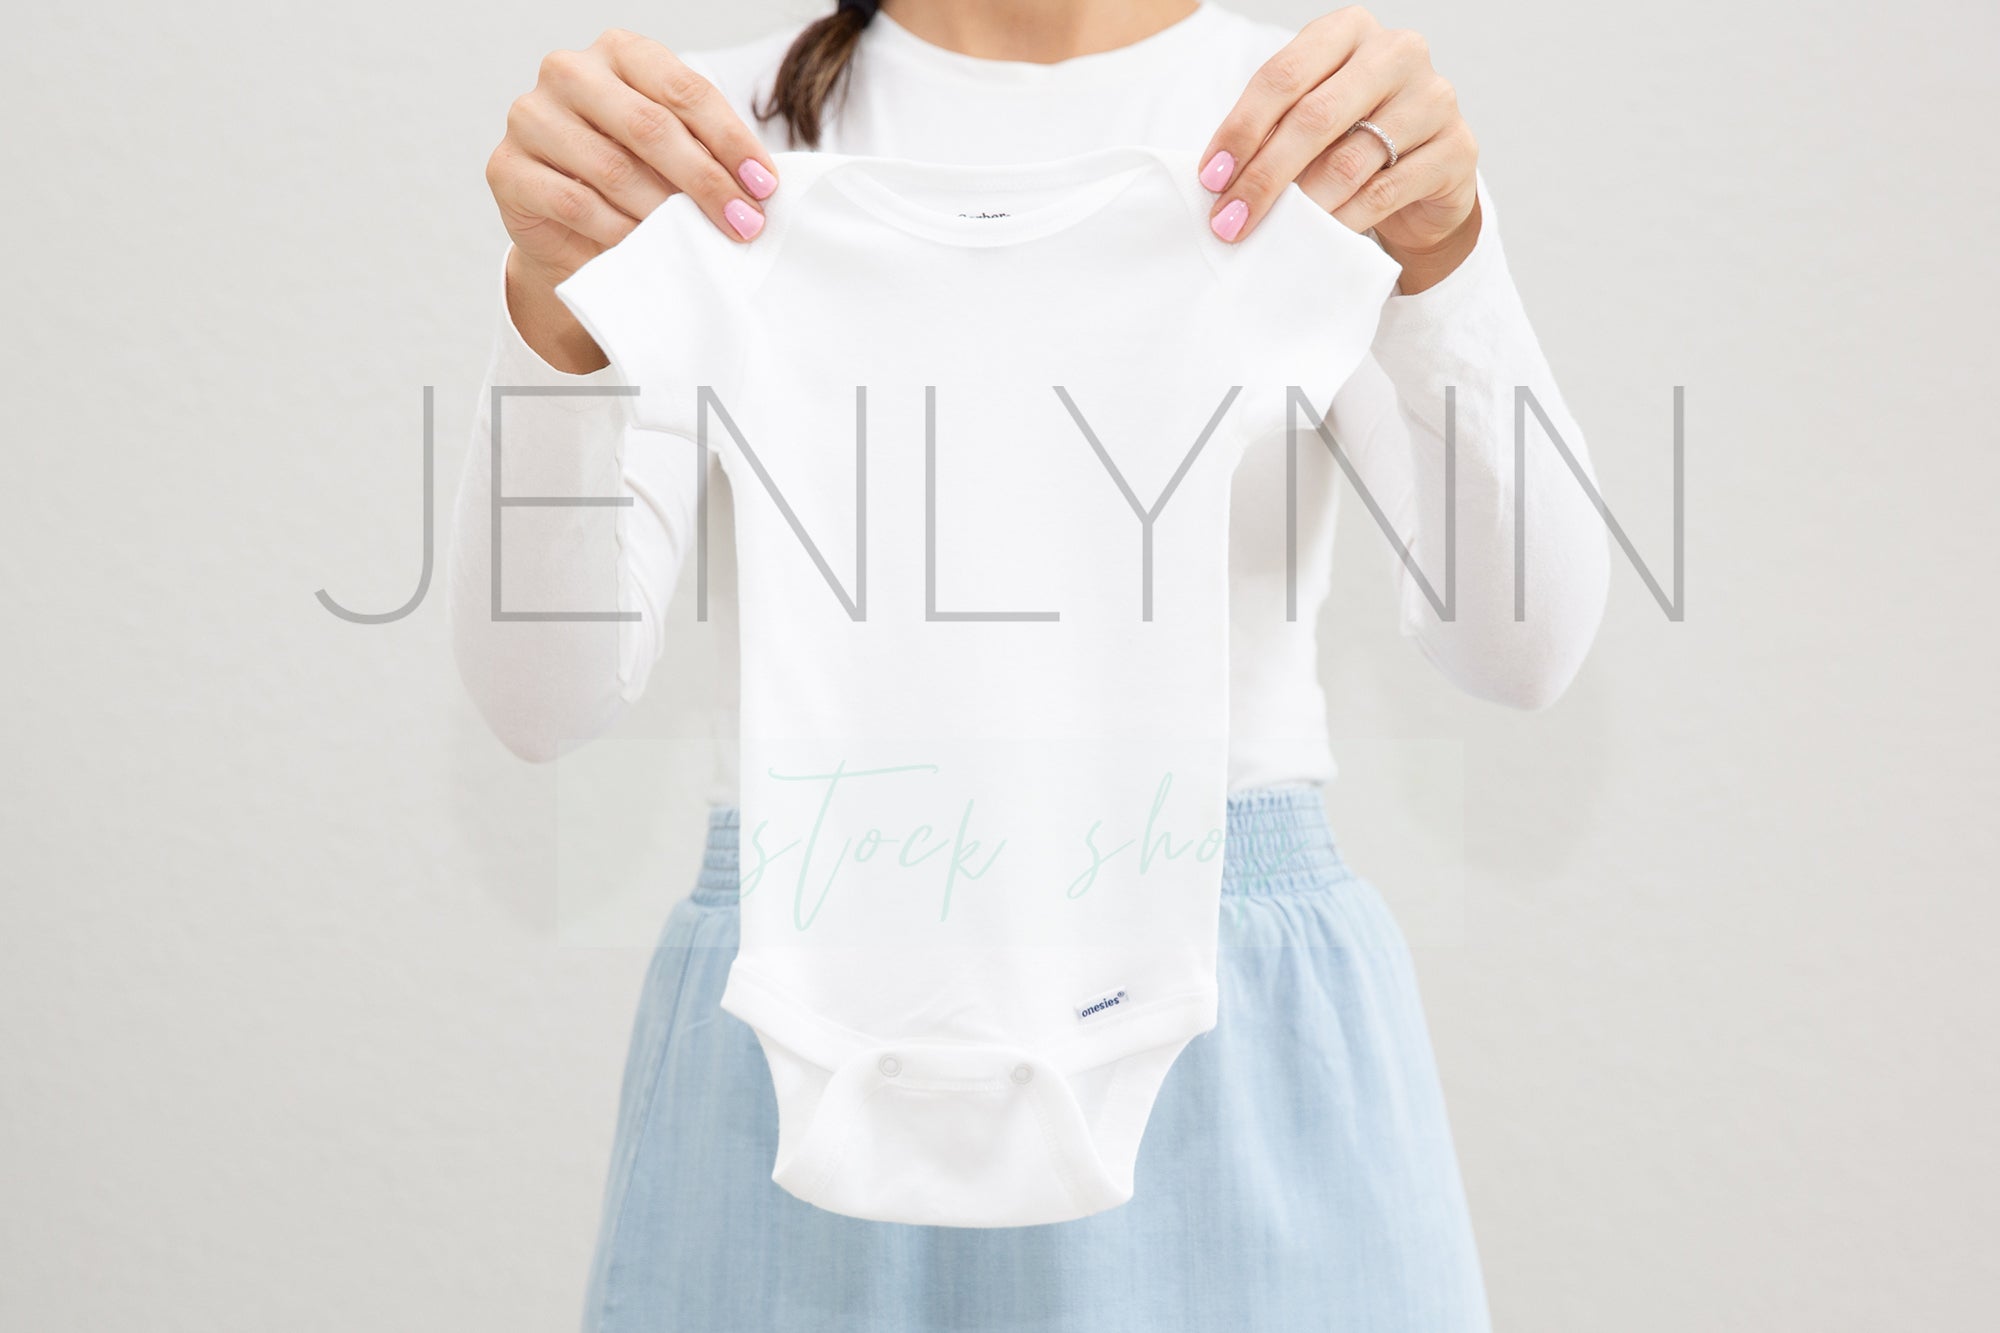 Download Woman Holding White Onesie Mockup 6 Jpg Jenlynn Stock Shop